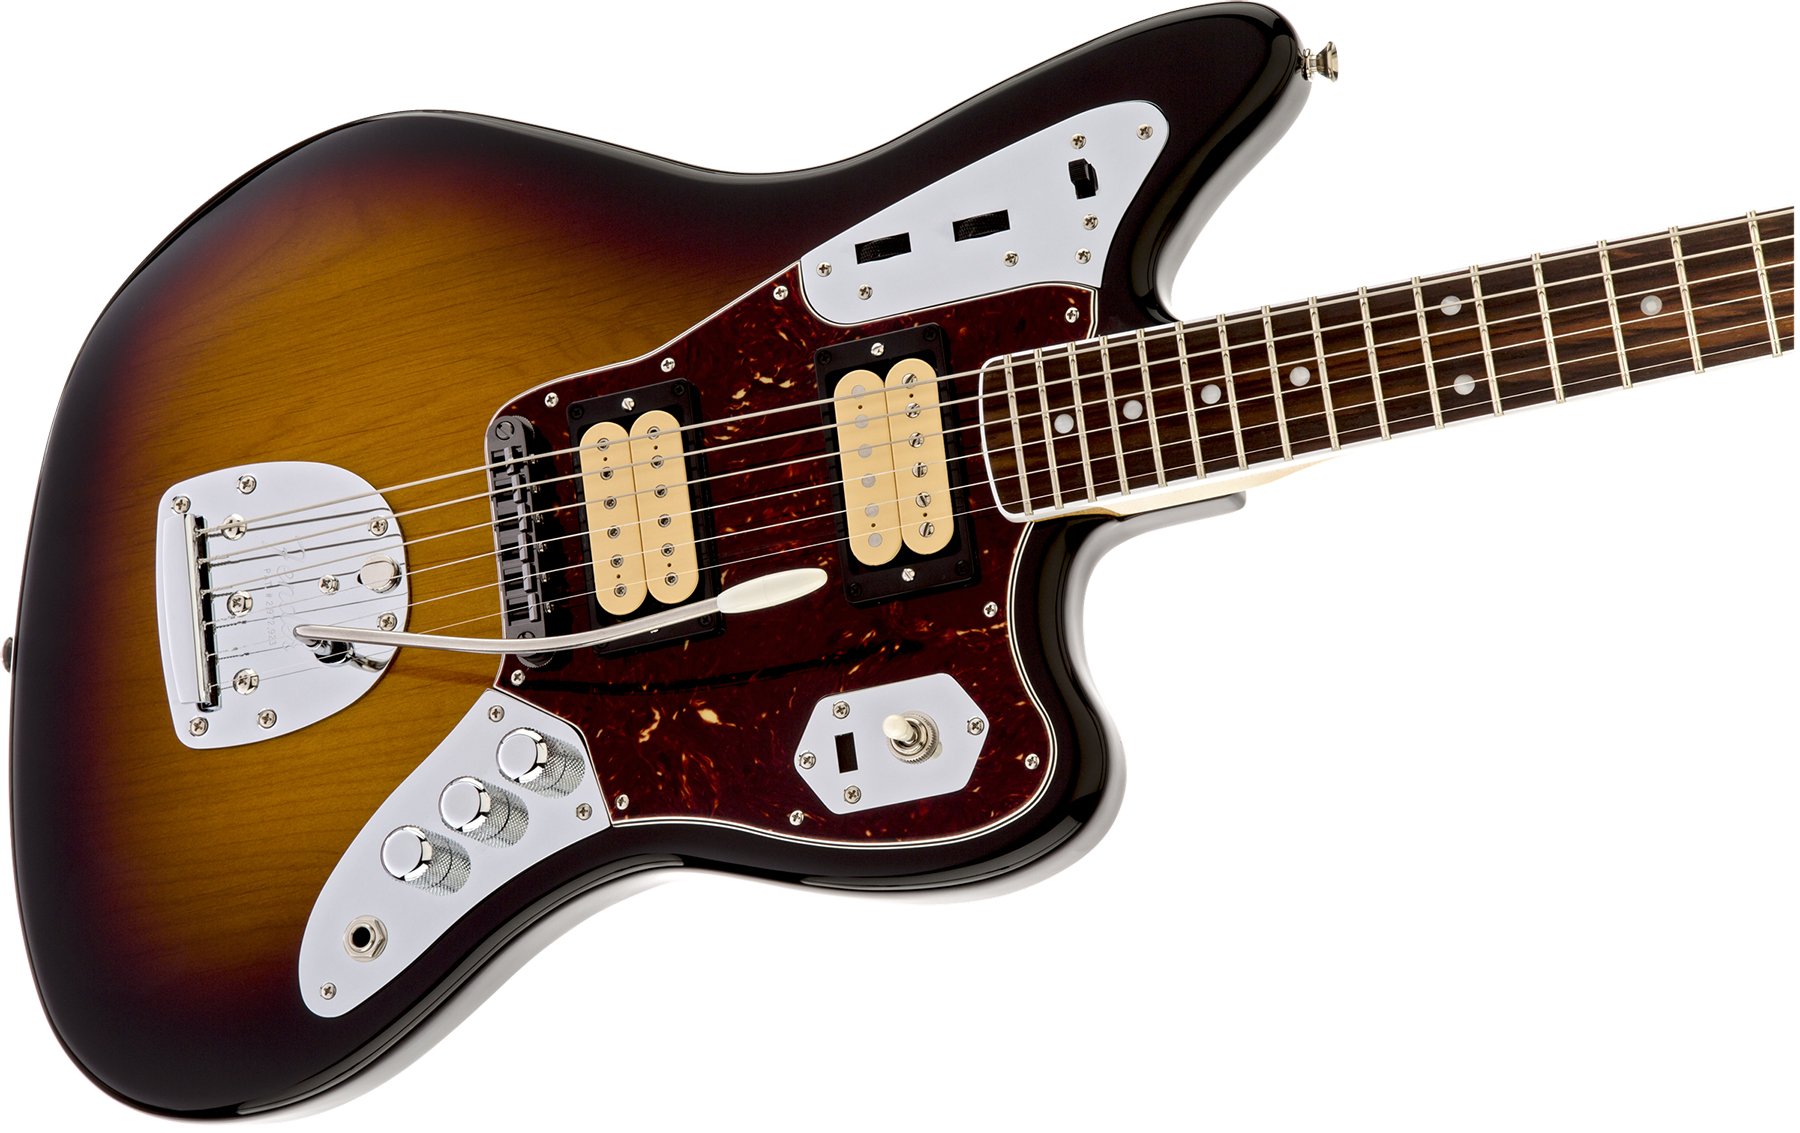 Fender Kurt Cobain Jaguar Mex Hh Trem Rw - 3-color Sunburst - Guitarra electrica retro rock - Variation 2